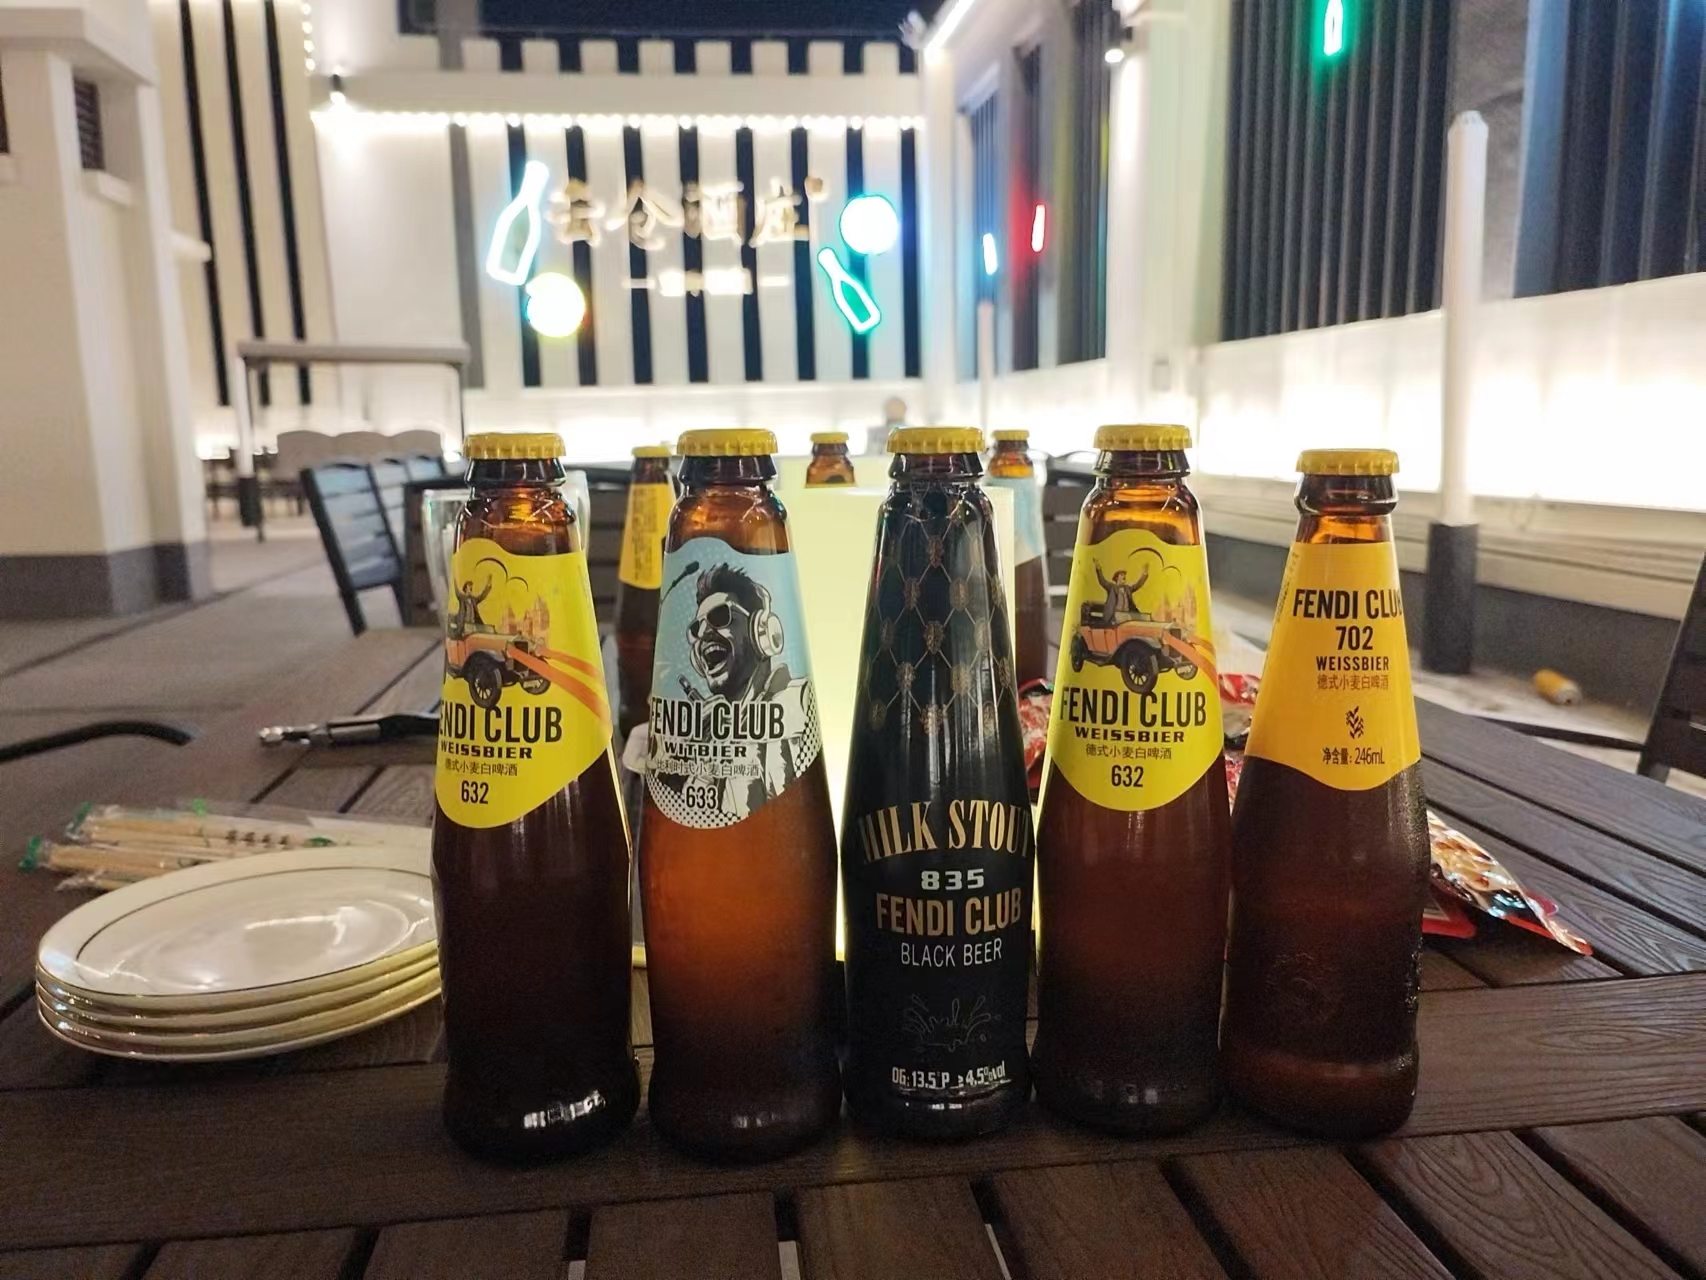 FENDI CLUB精酿啤酒馆与传统啤酒